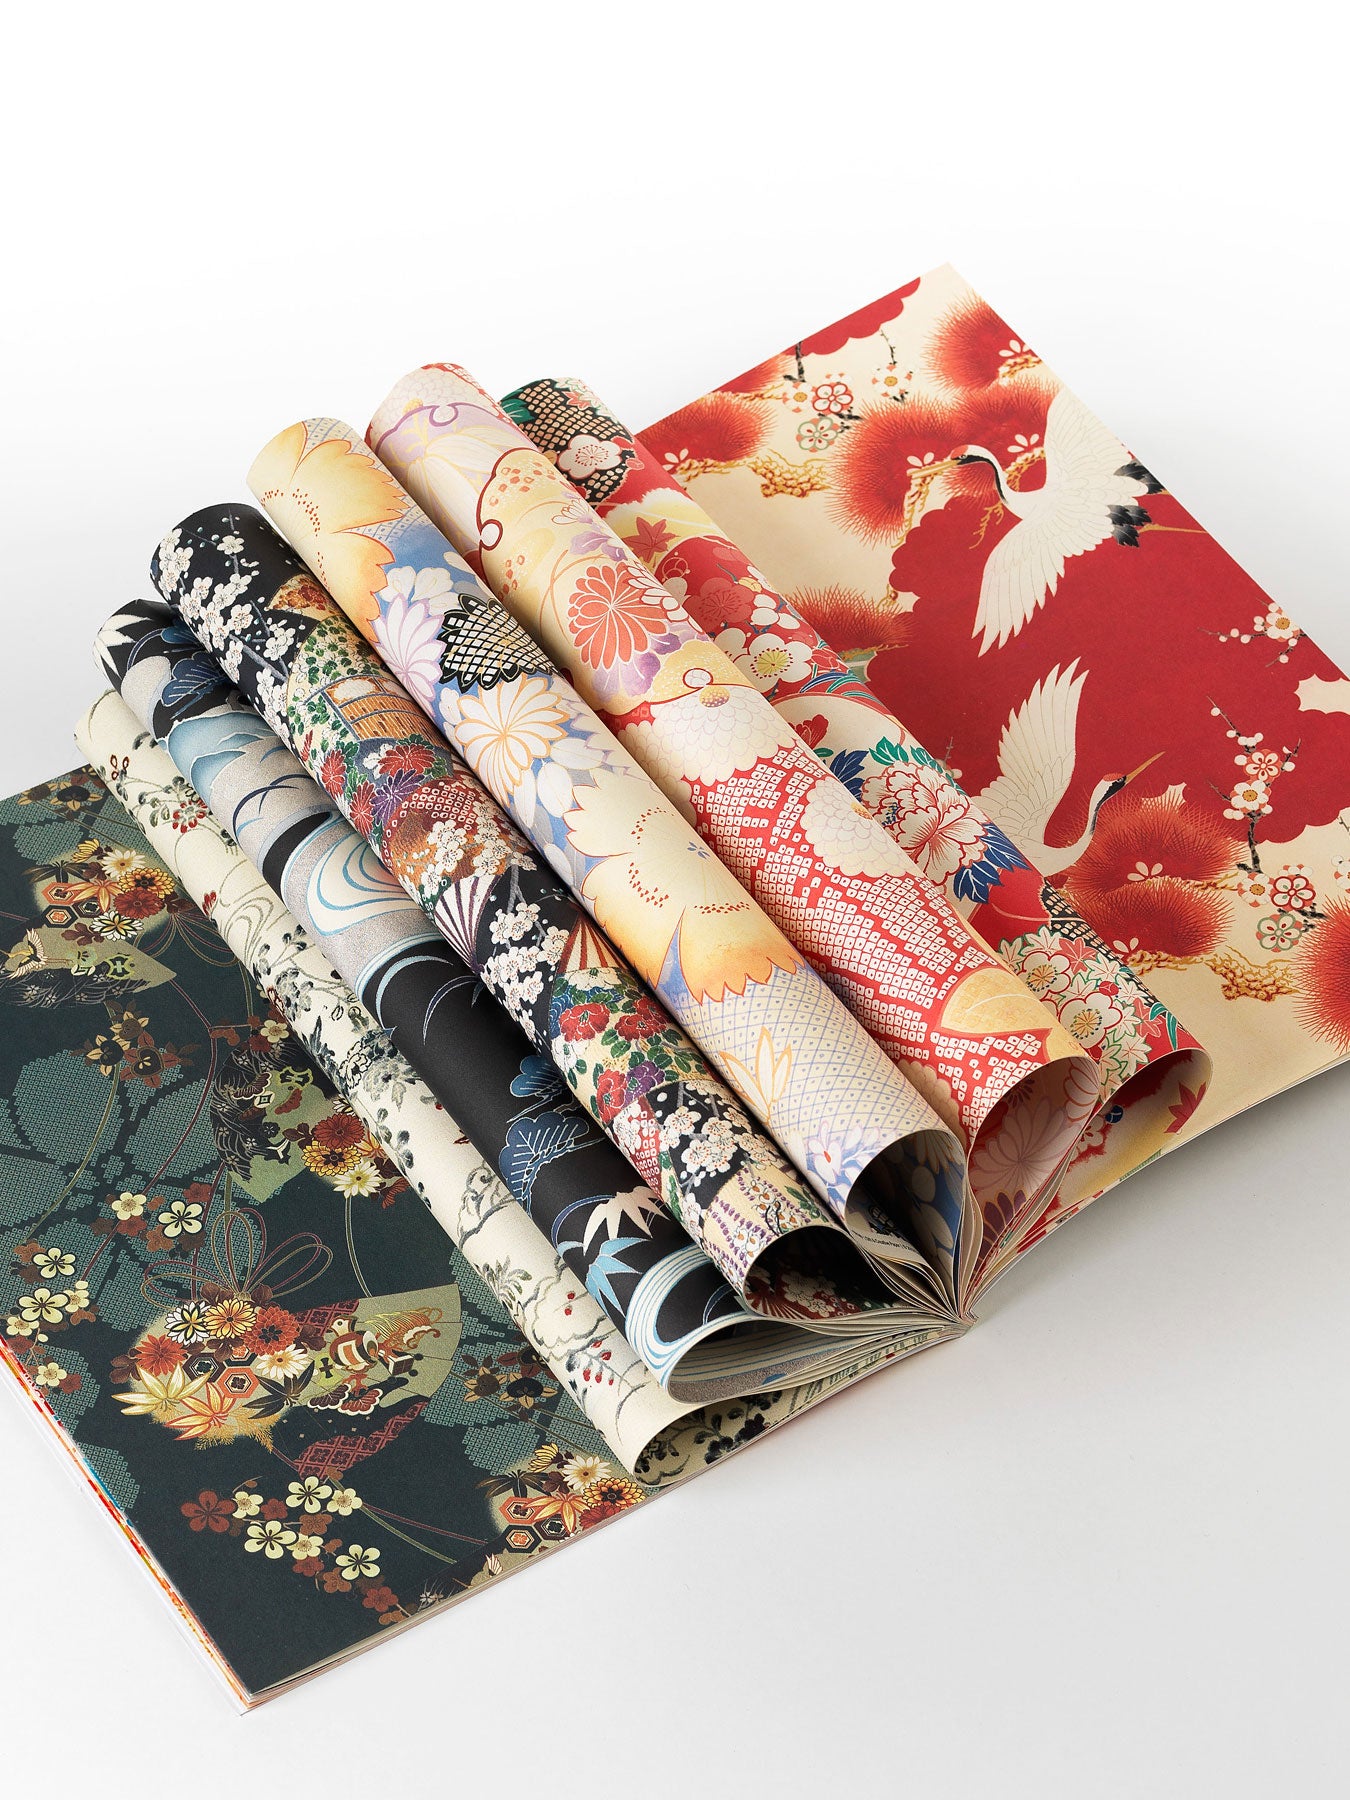 Kimono Gift & Creative Paper